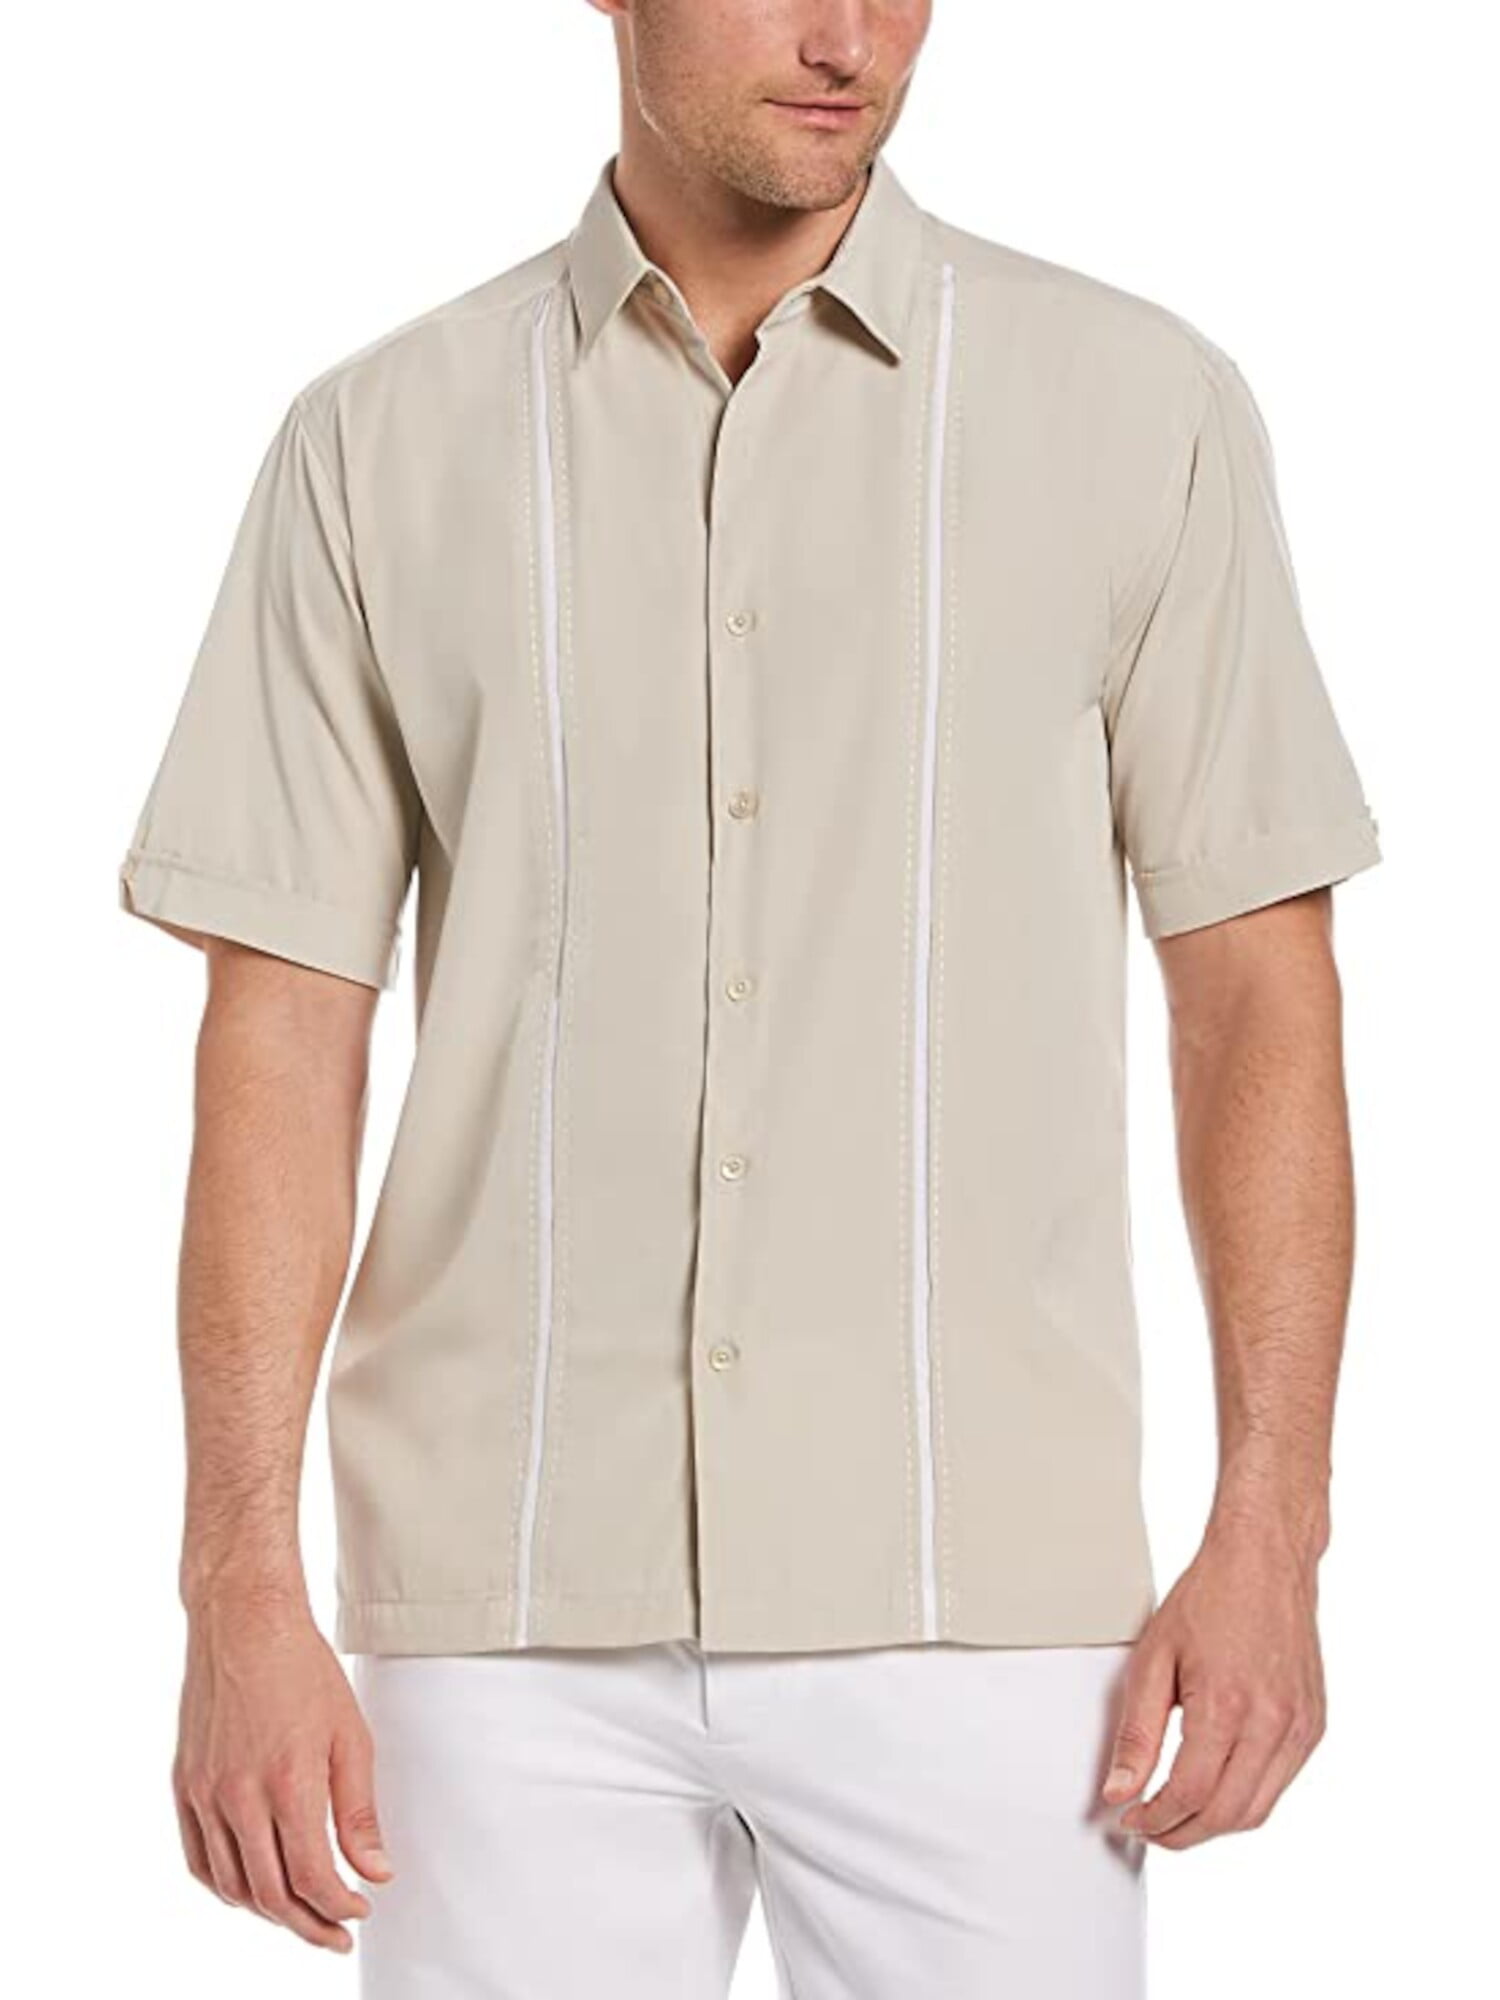 Invalid Feud Admit CUBAVERA Mens Beige Short Sleeve Classic Fit Button Down Casual Shirt XL -  Walmart.com